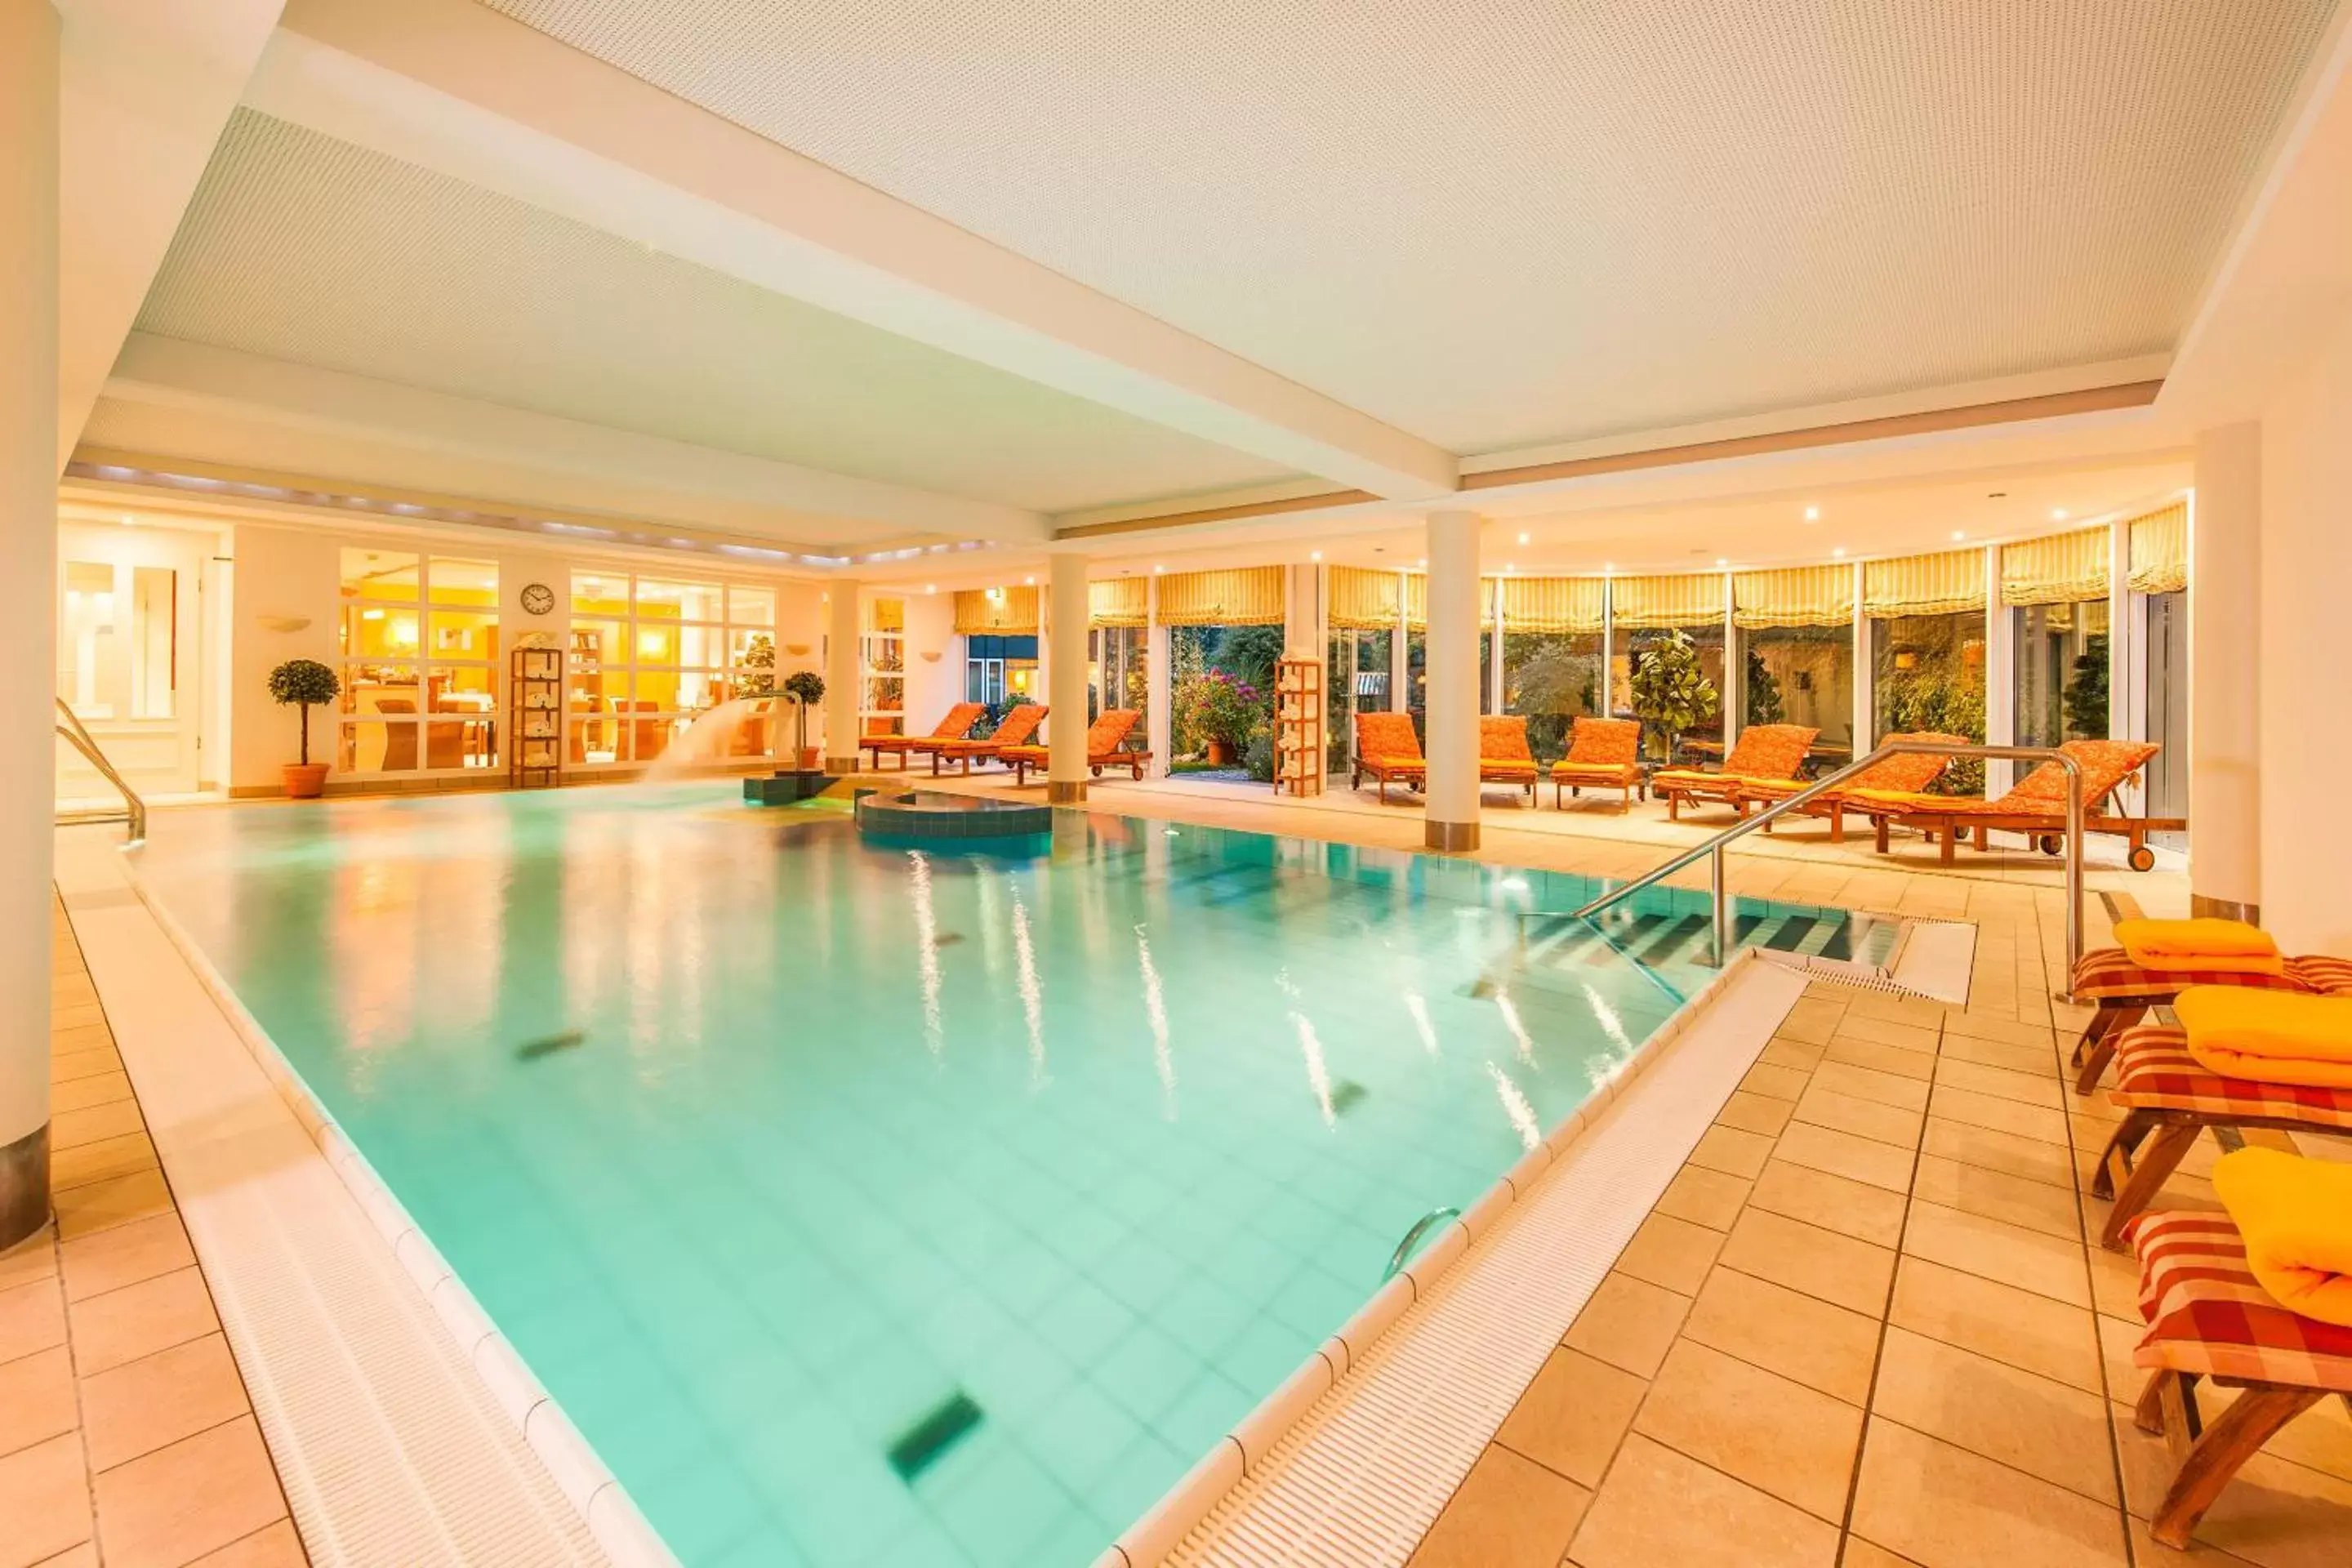 Swimming Pool in Hotel Birke, Ringhotel Kiel